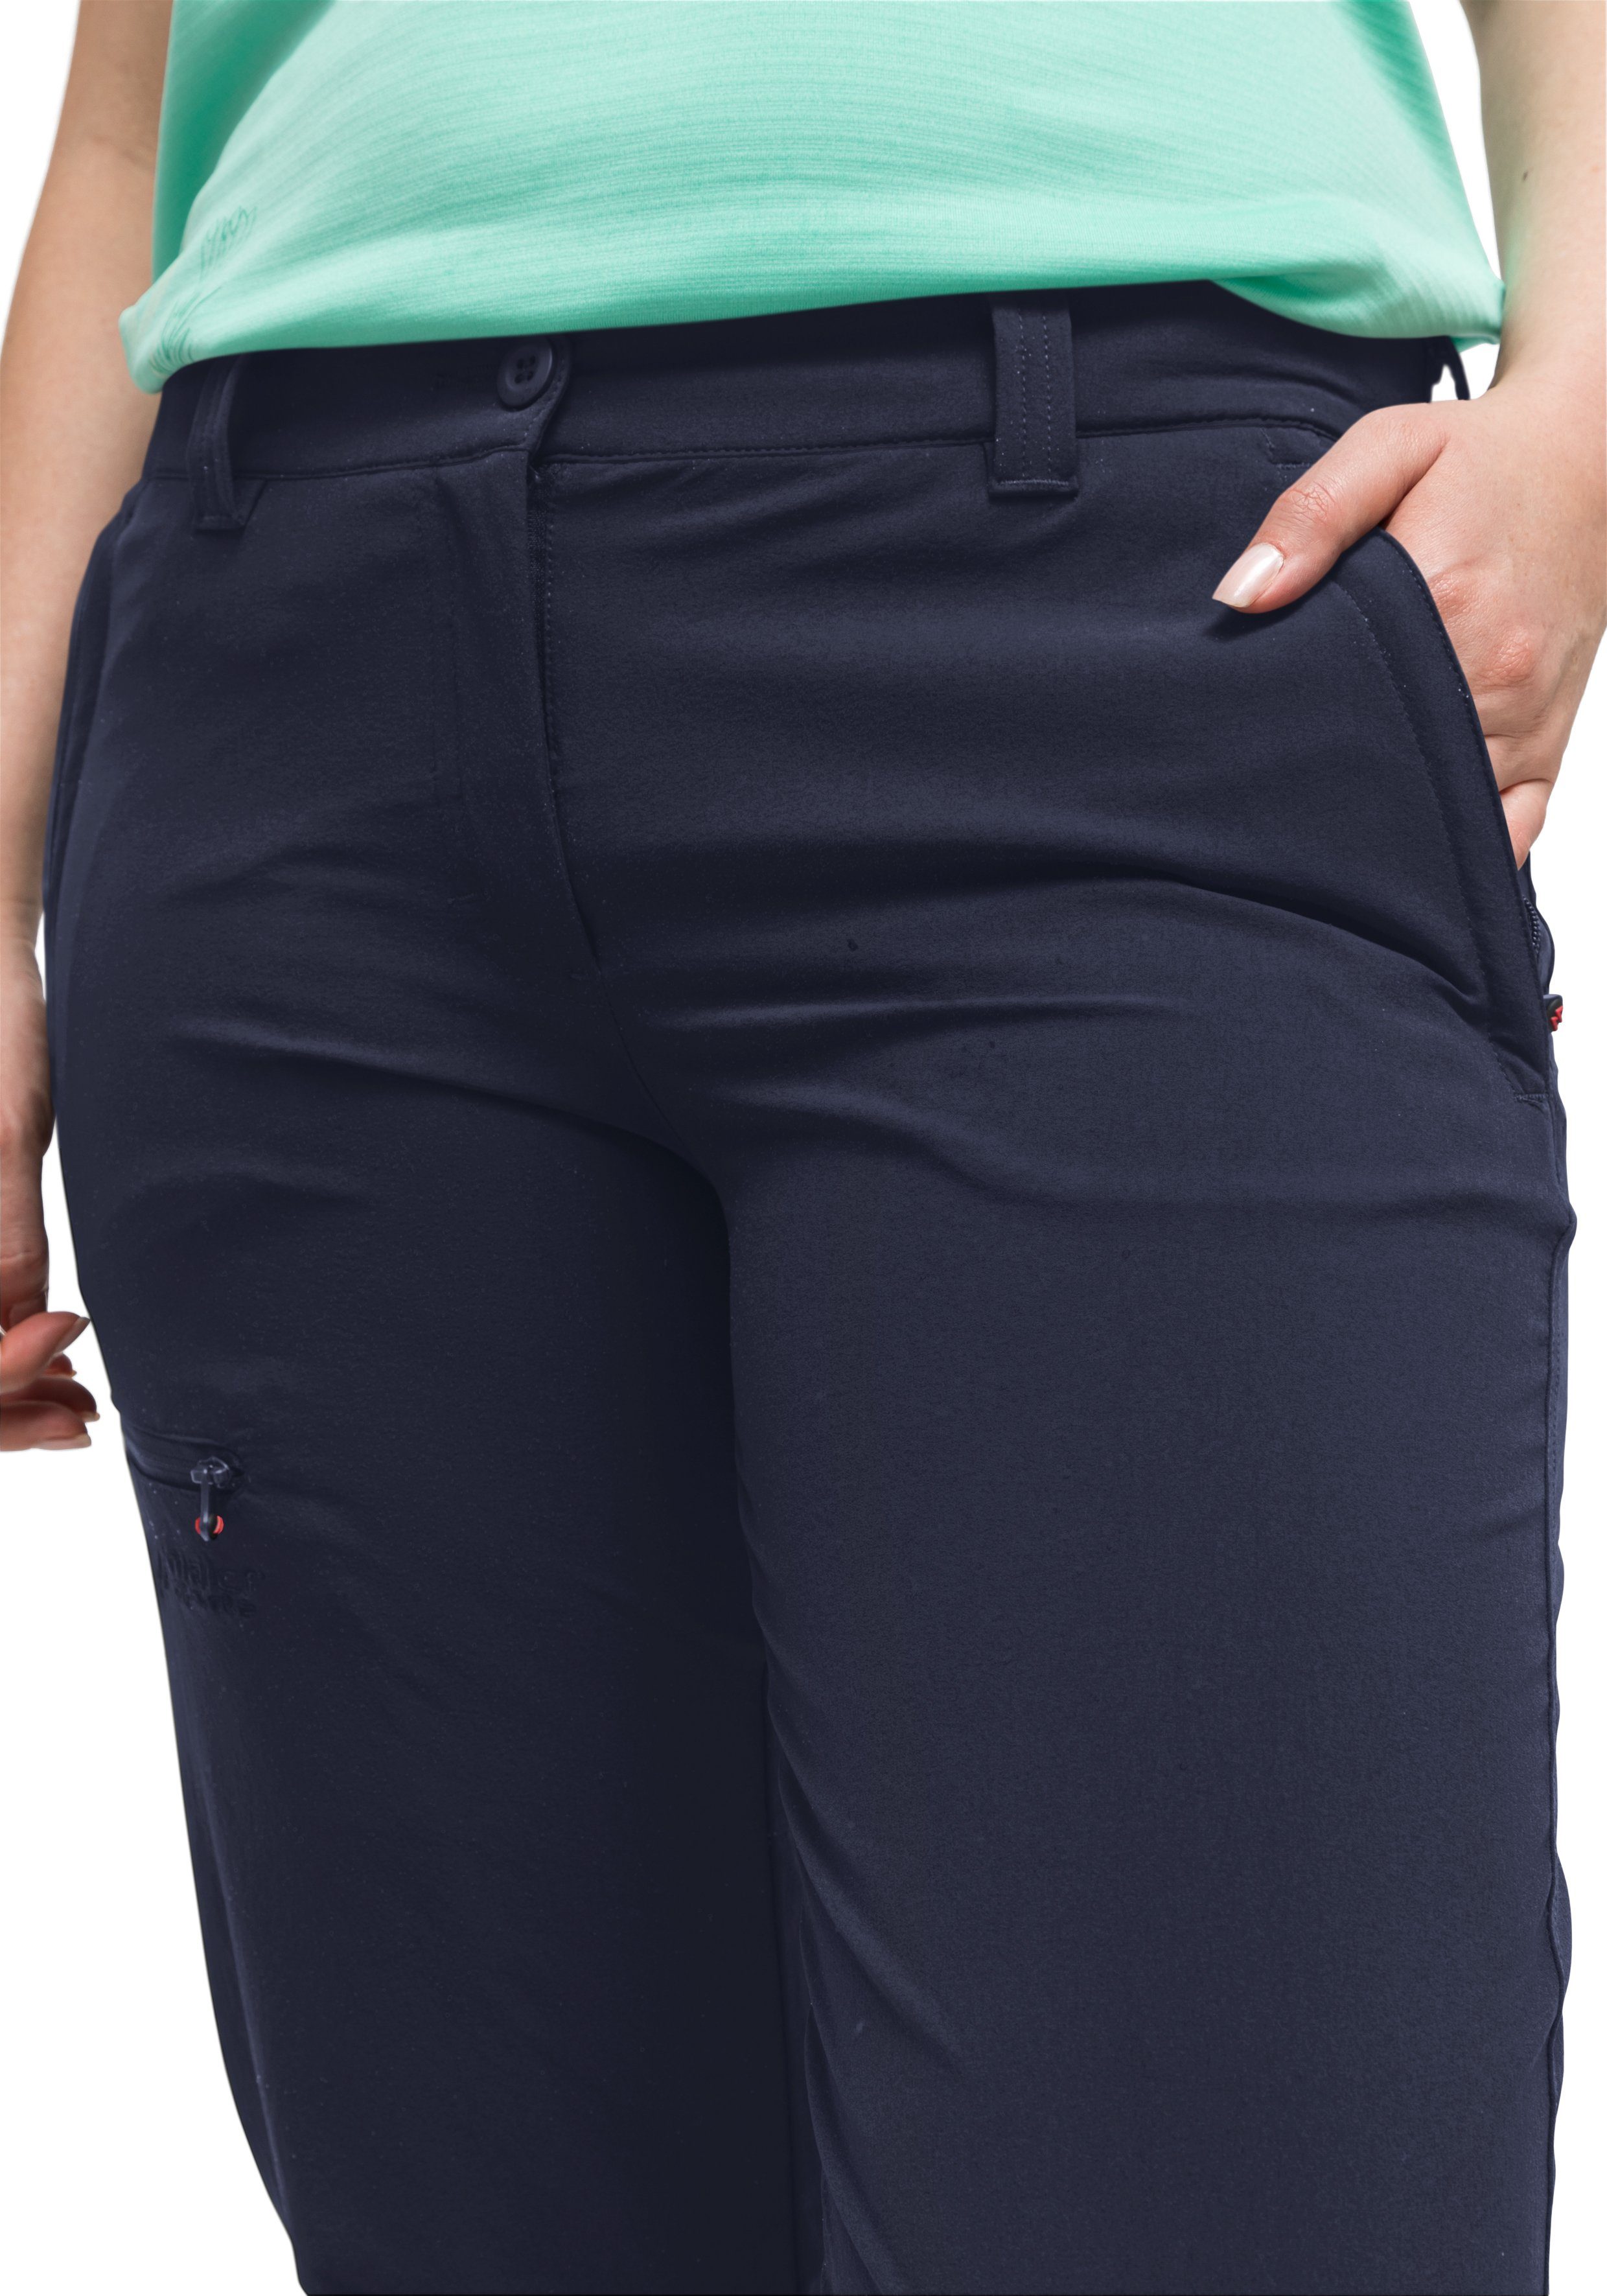 Lulaka Maier Damen und blau Outdoor-Hose Wanderhose, Sports Funktionshose elastische 7/8 atmungsaktive